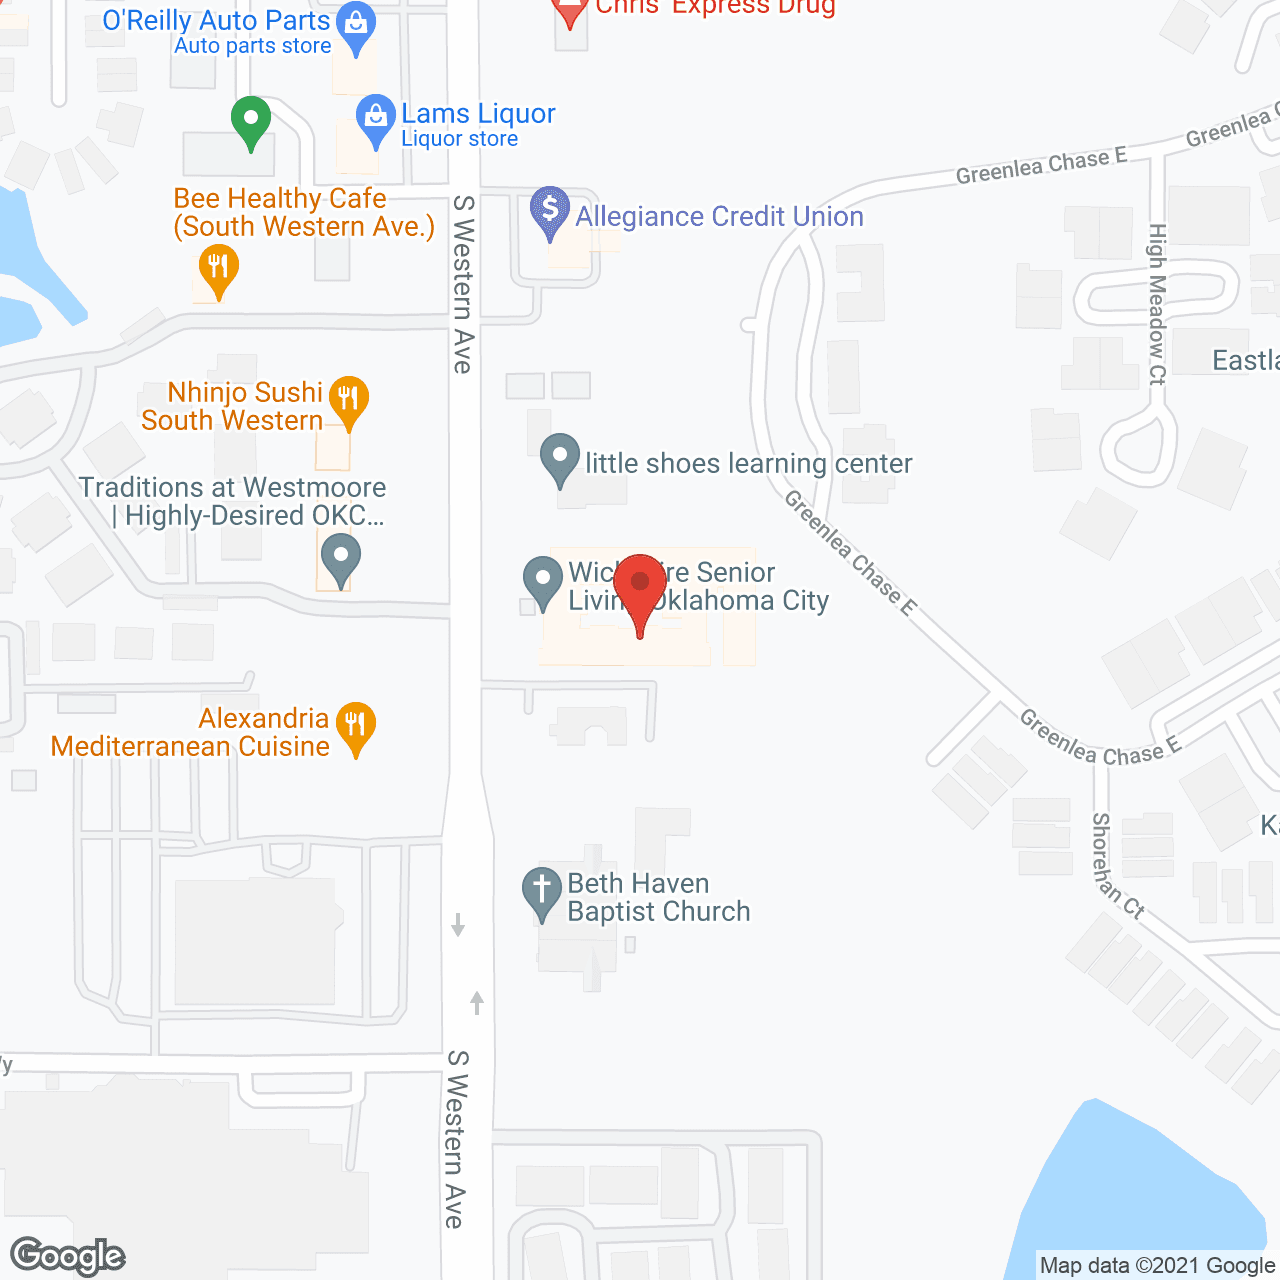 Wickshire Oklahoma City in google map